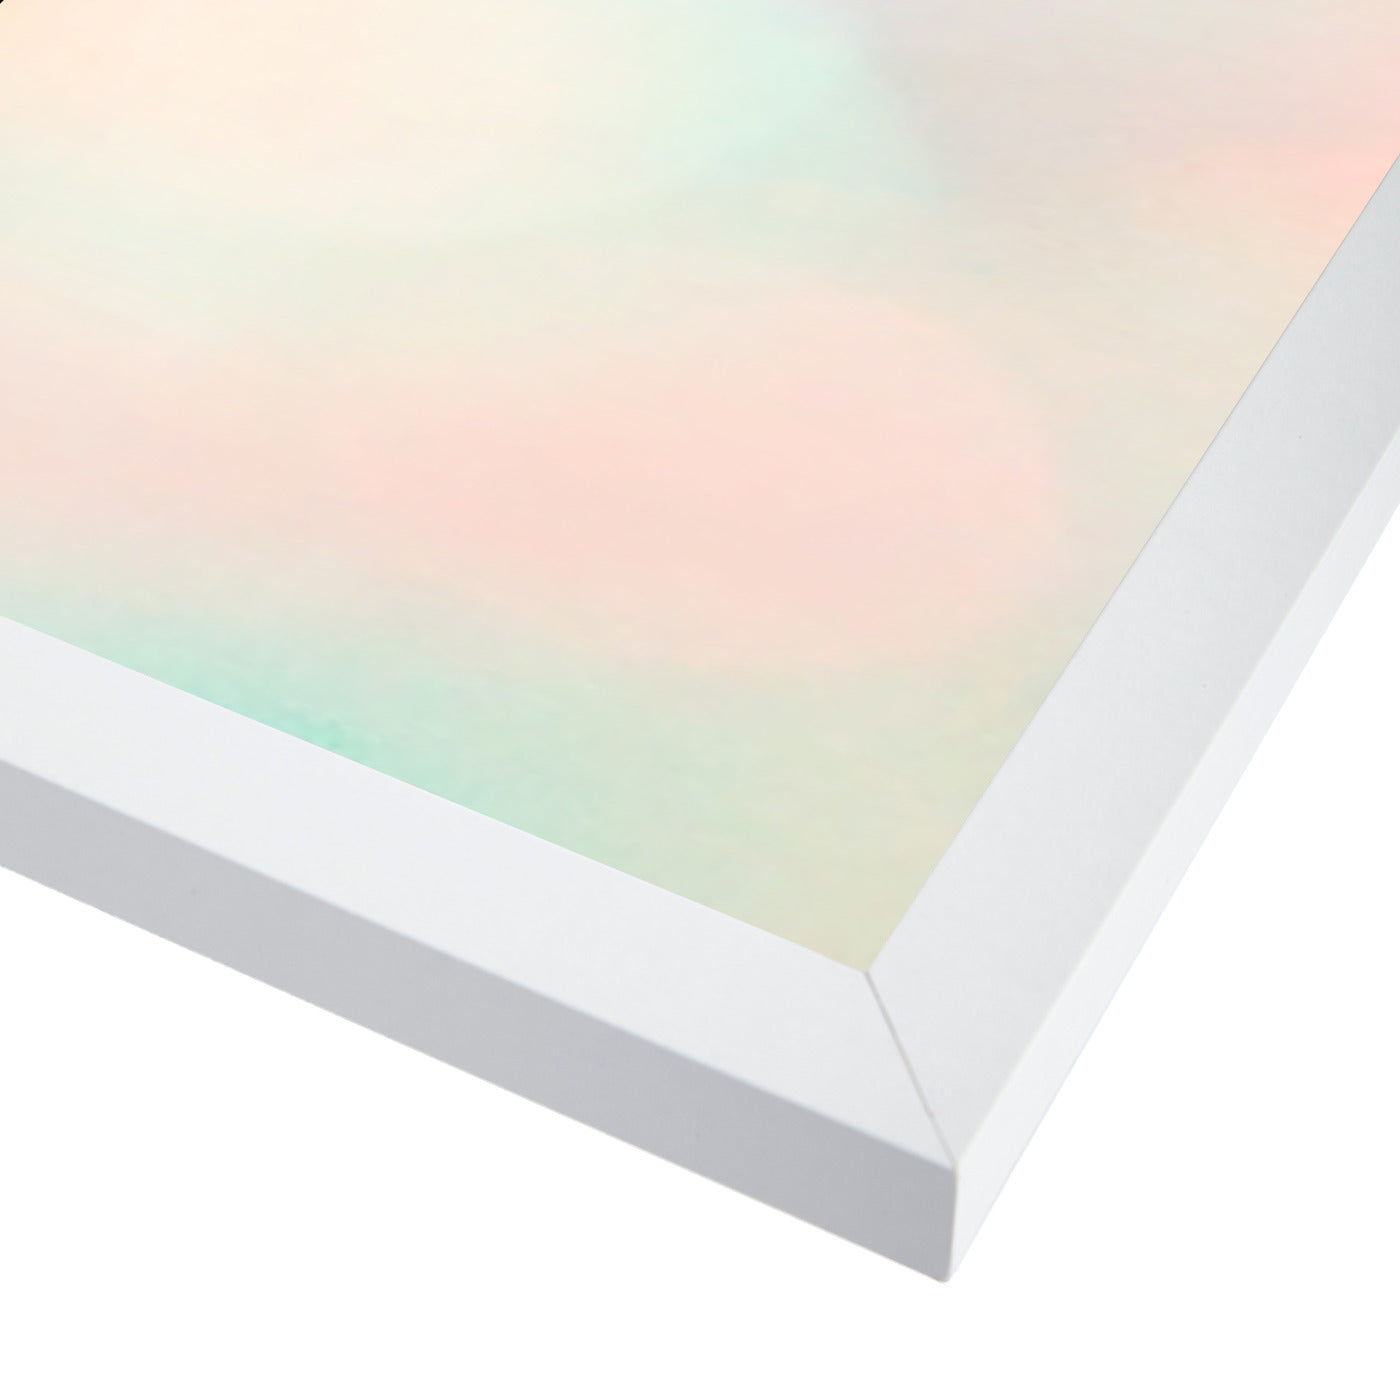 Rainbow Sherbet Sky By The Gingham Owl - White Framed Print - Wall Art - Americanflat